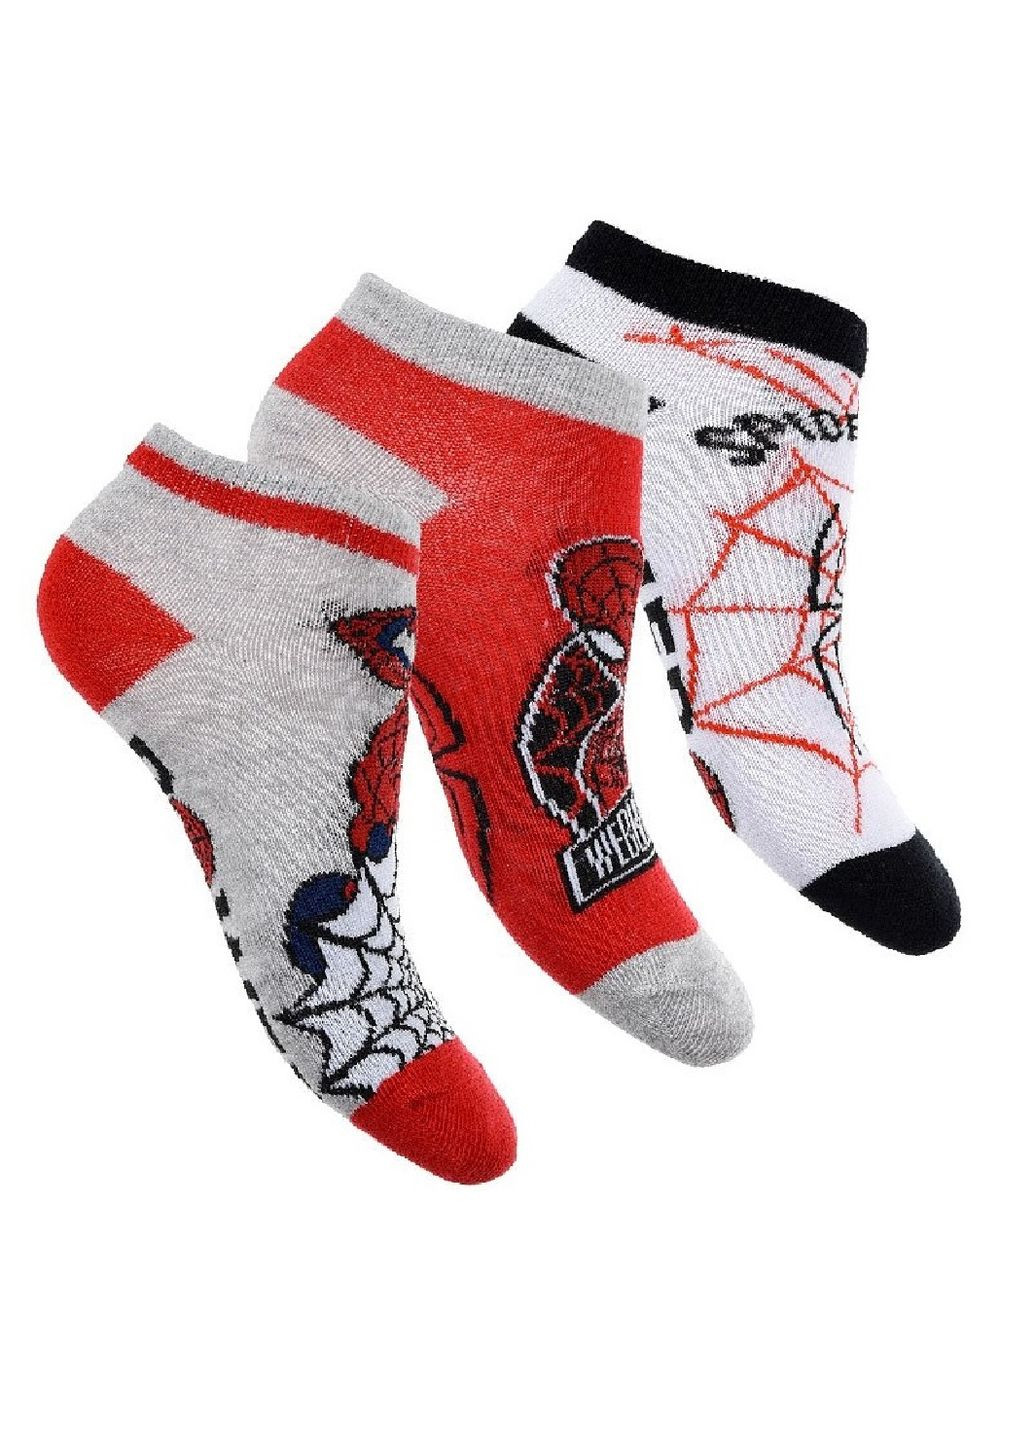 Шкарпетки 3 пари Spider Man (Человек Паук) UE06152 Disney шкарпетки 3шт. (292142640)